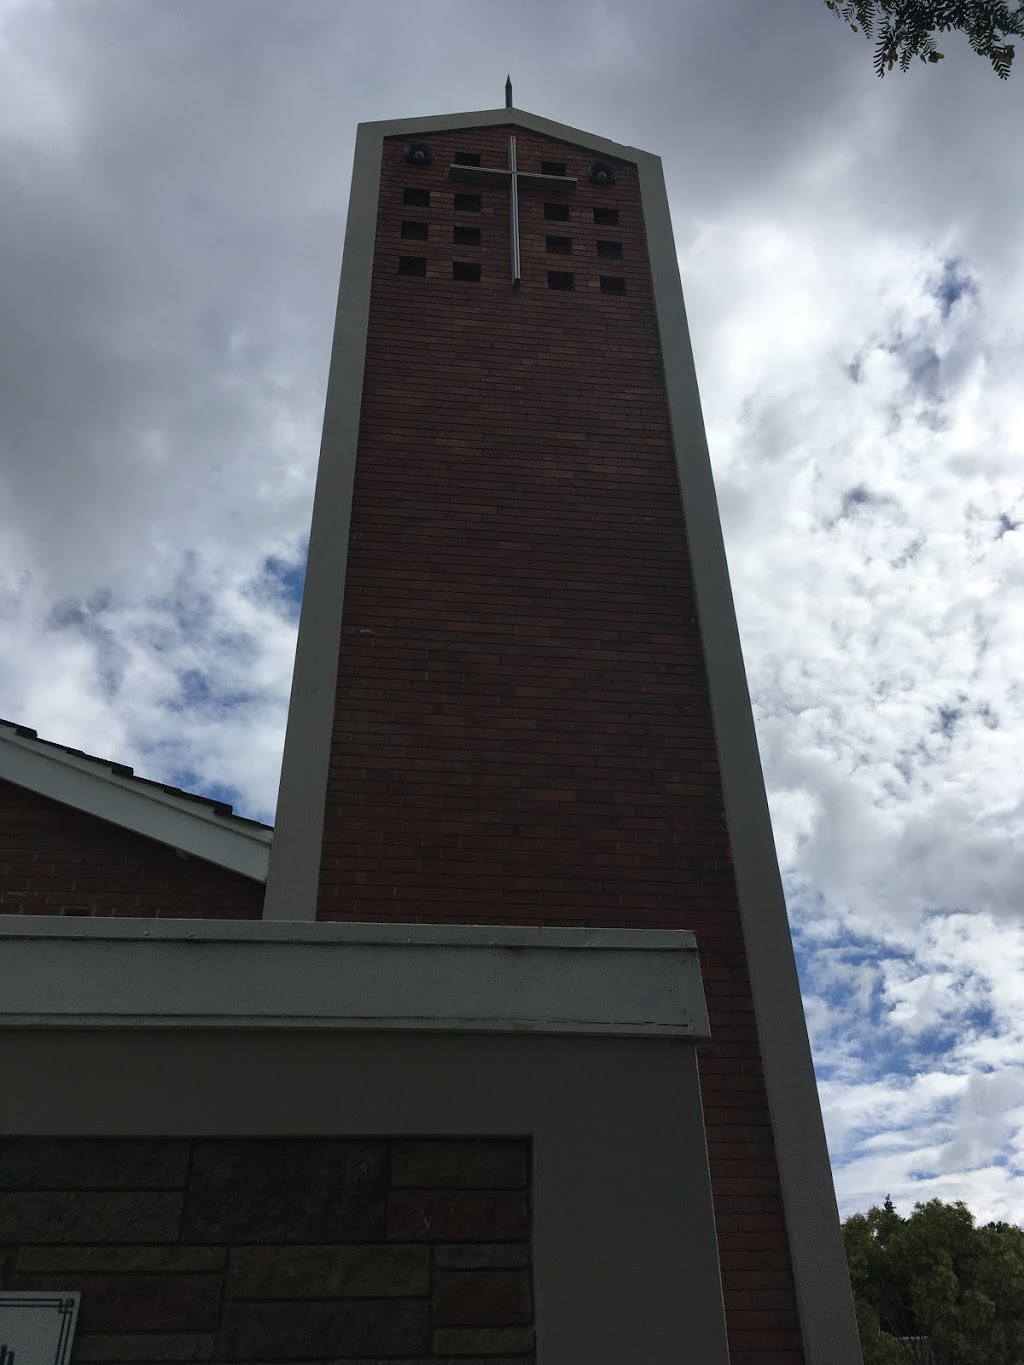 Presbyterian Church of Queensland | church | 31 Herbert St, Goondiwindi QLD 4390, Australia | 0746713654 OR +61 7 4671 3654